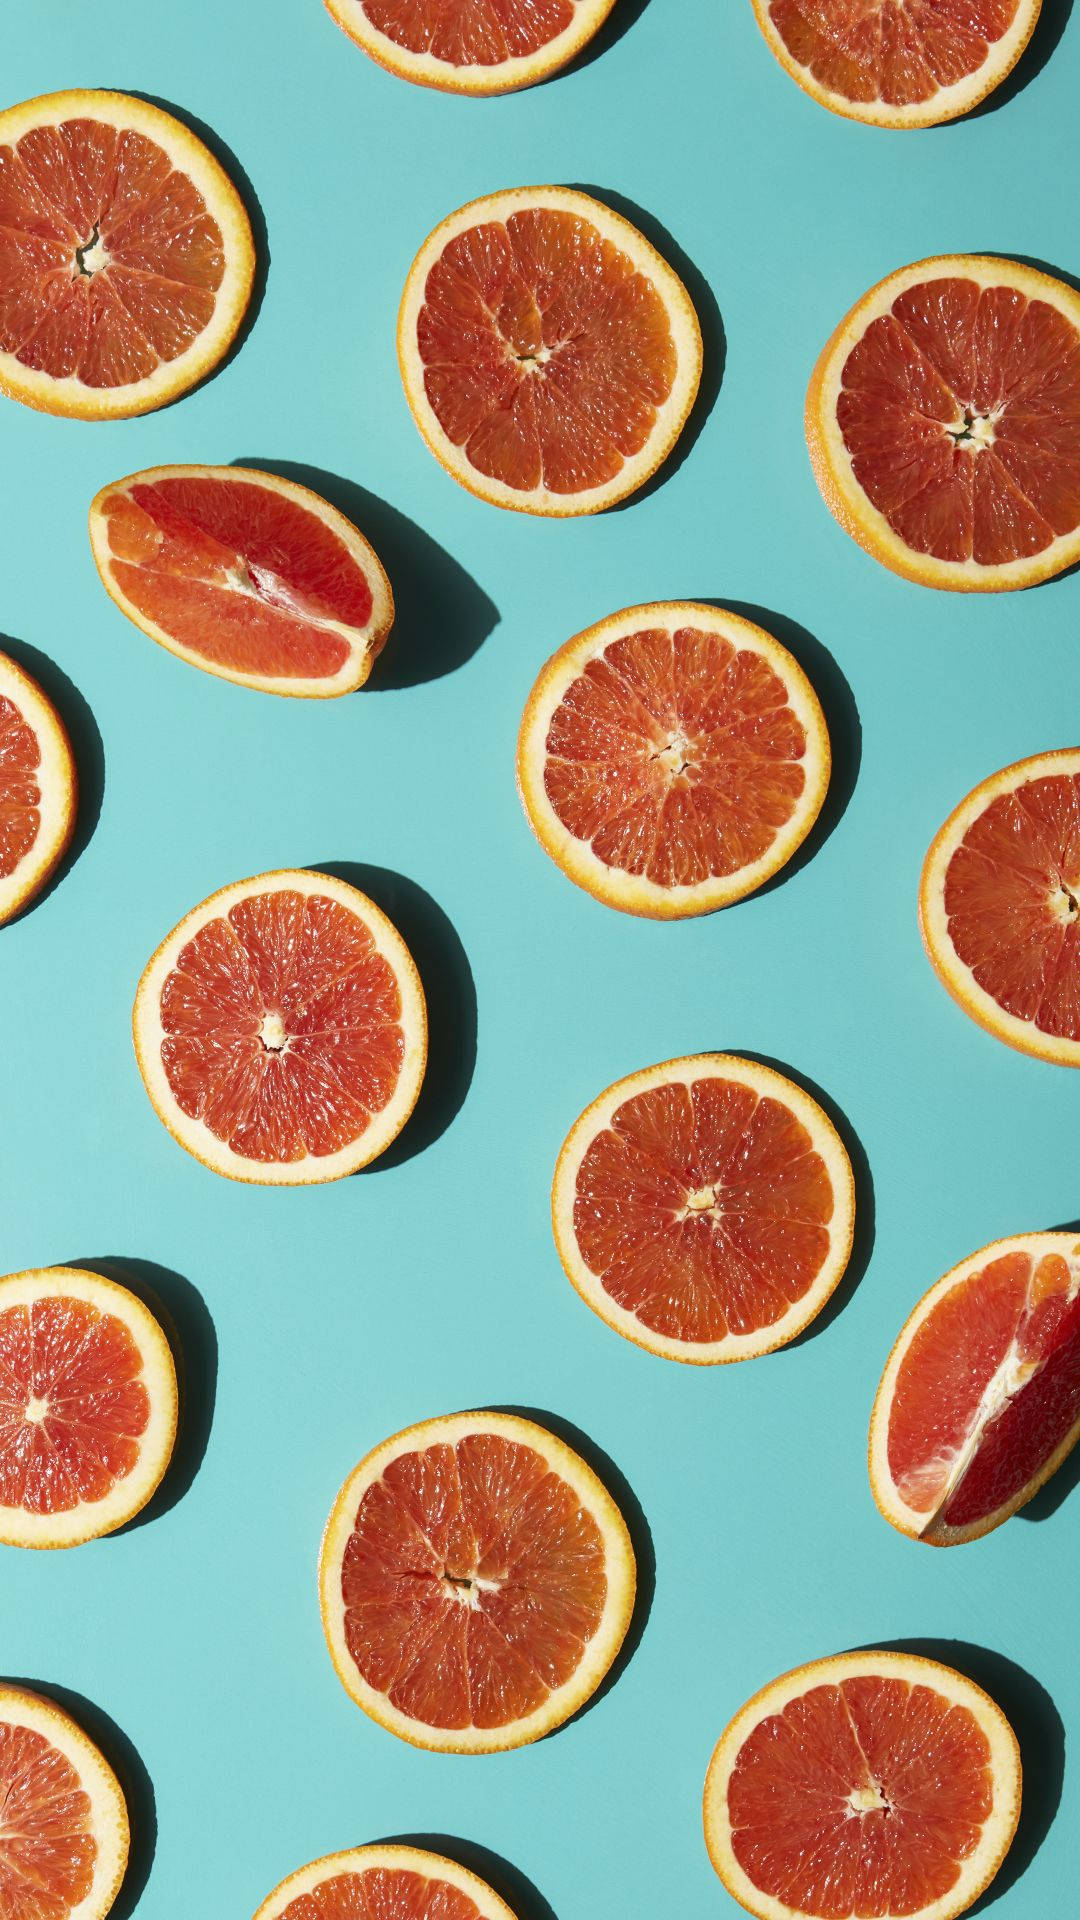 Blood Orange Citrus Fruit Teal Cute Wallpaper